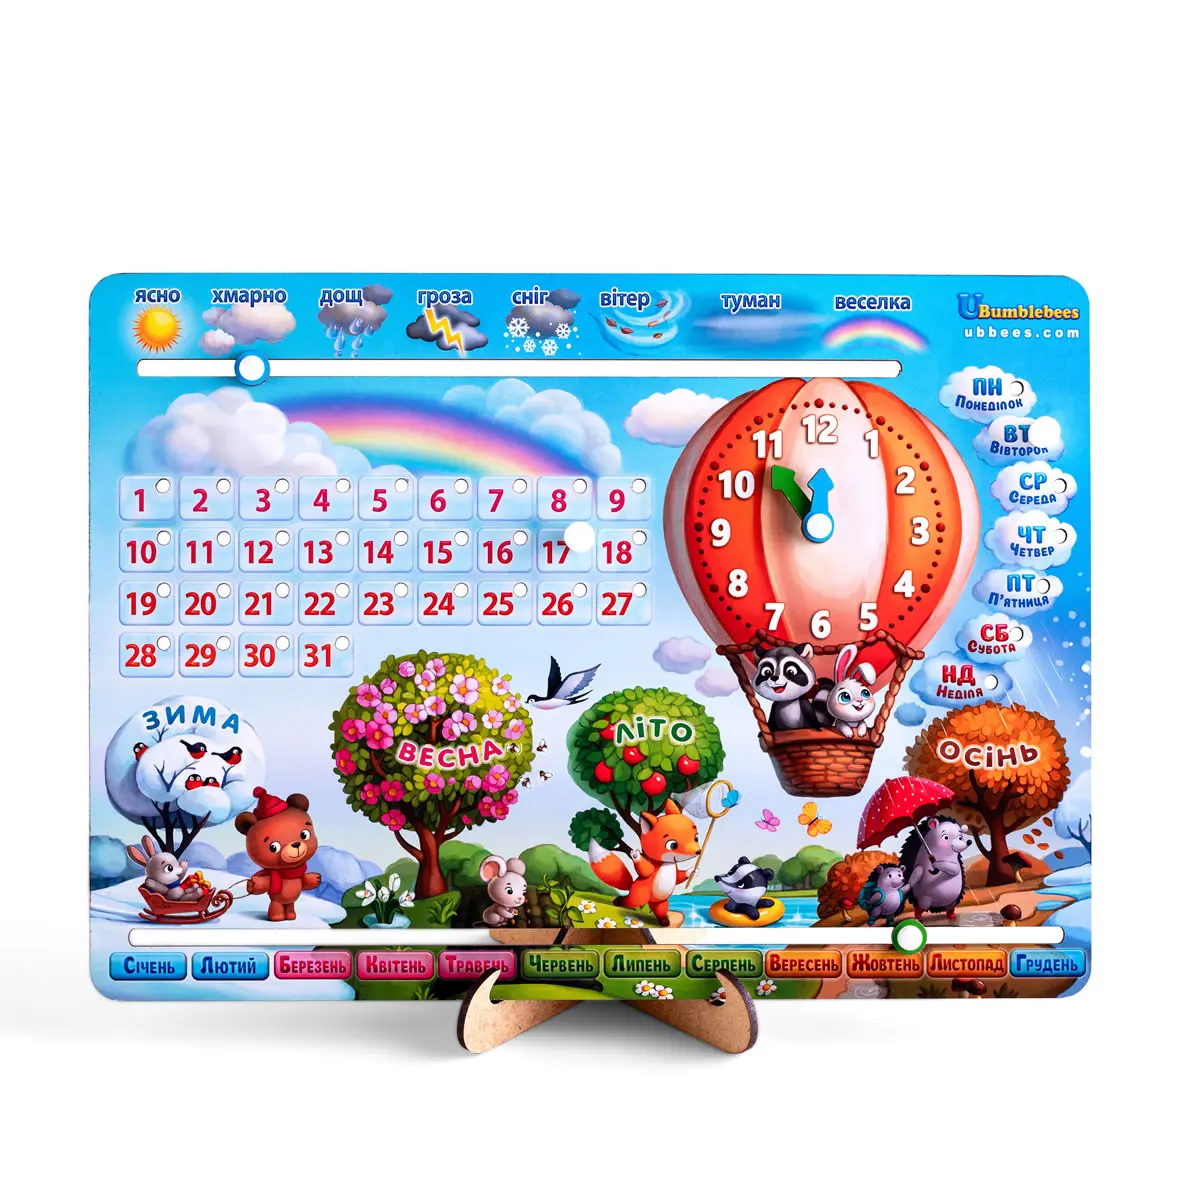 "Kalender - 1" (Luftballon) ukrainische Sprache